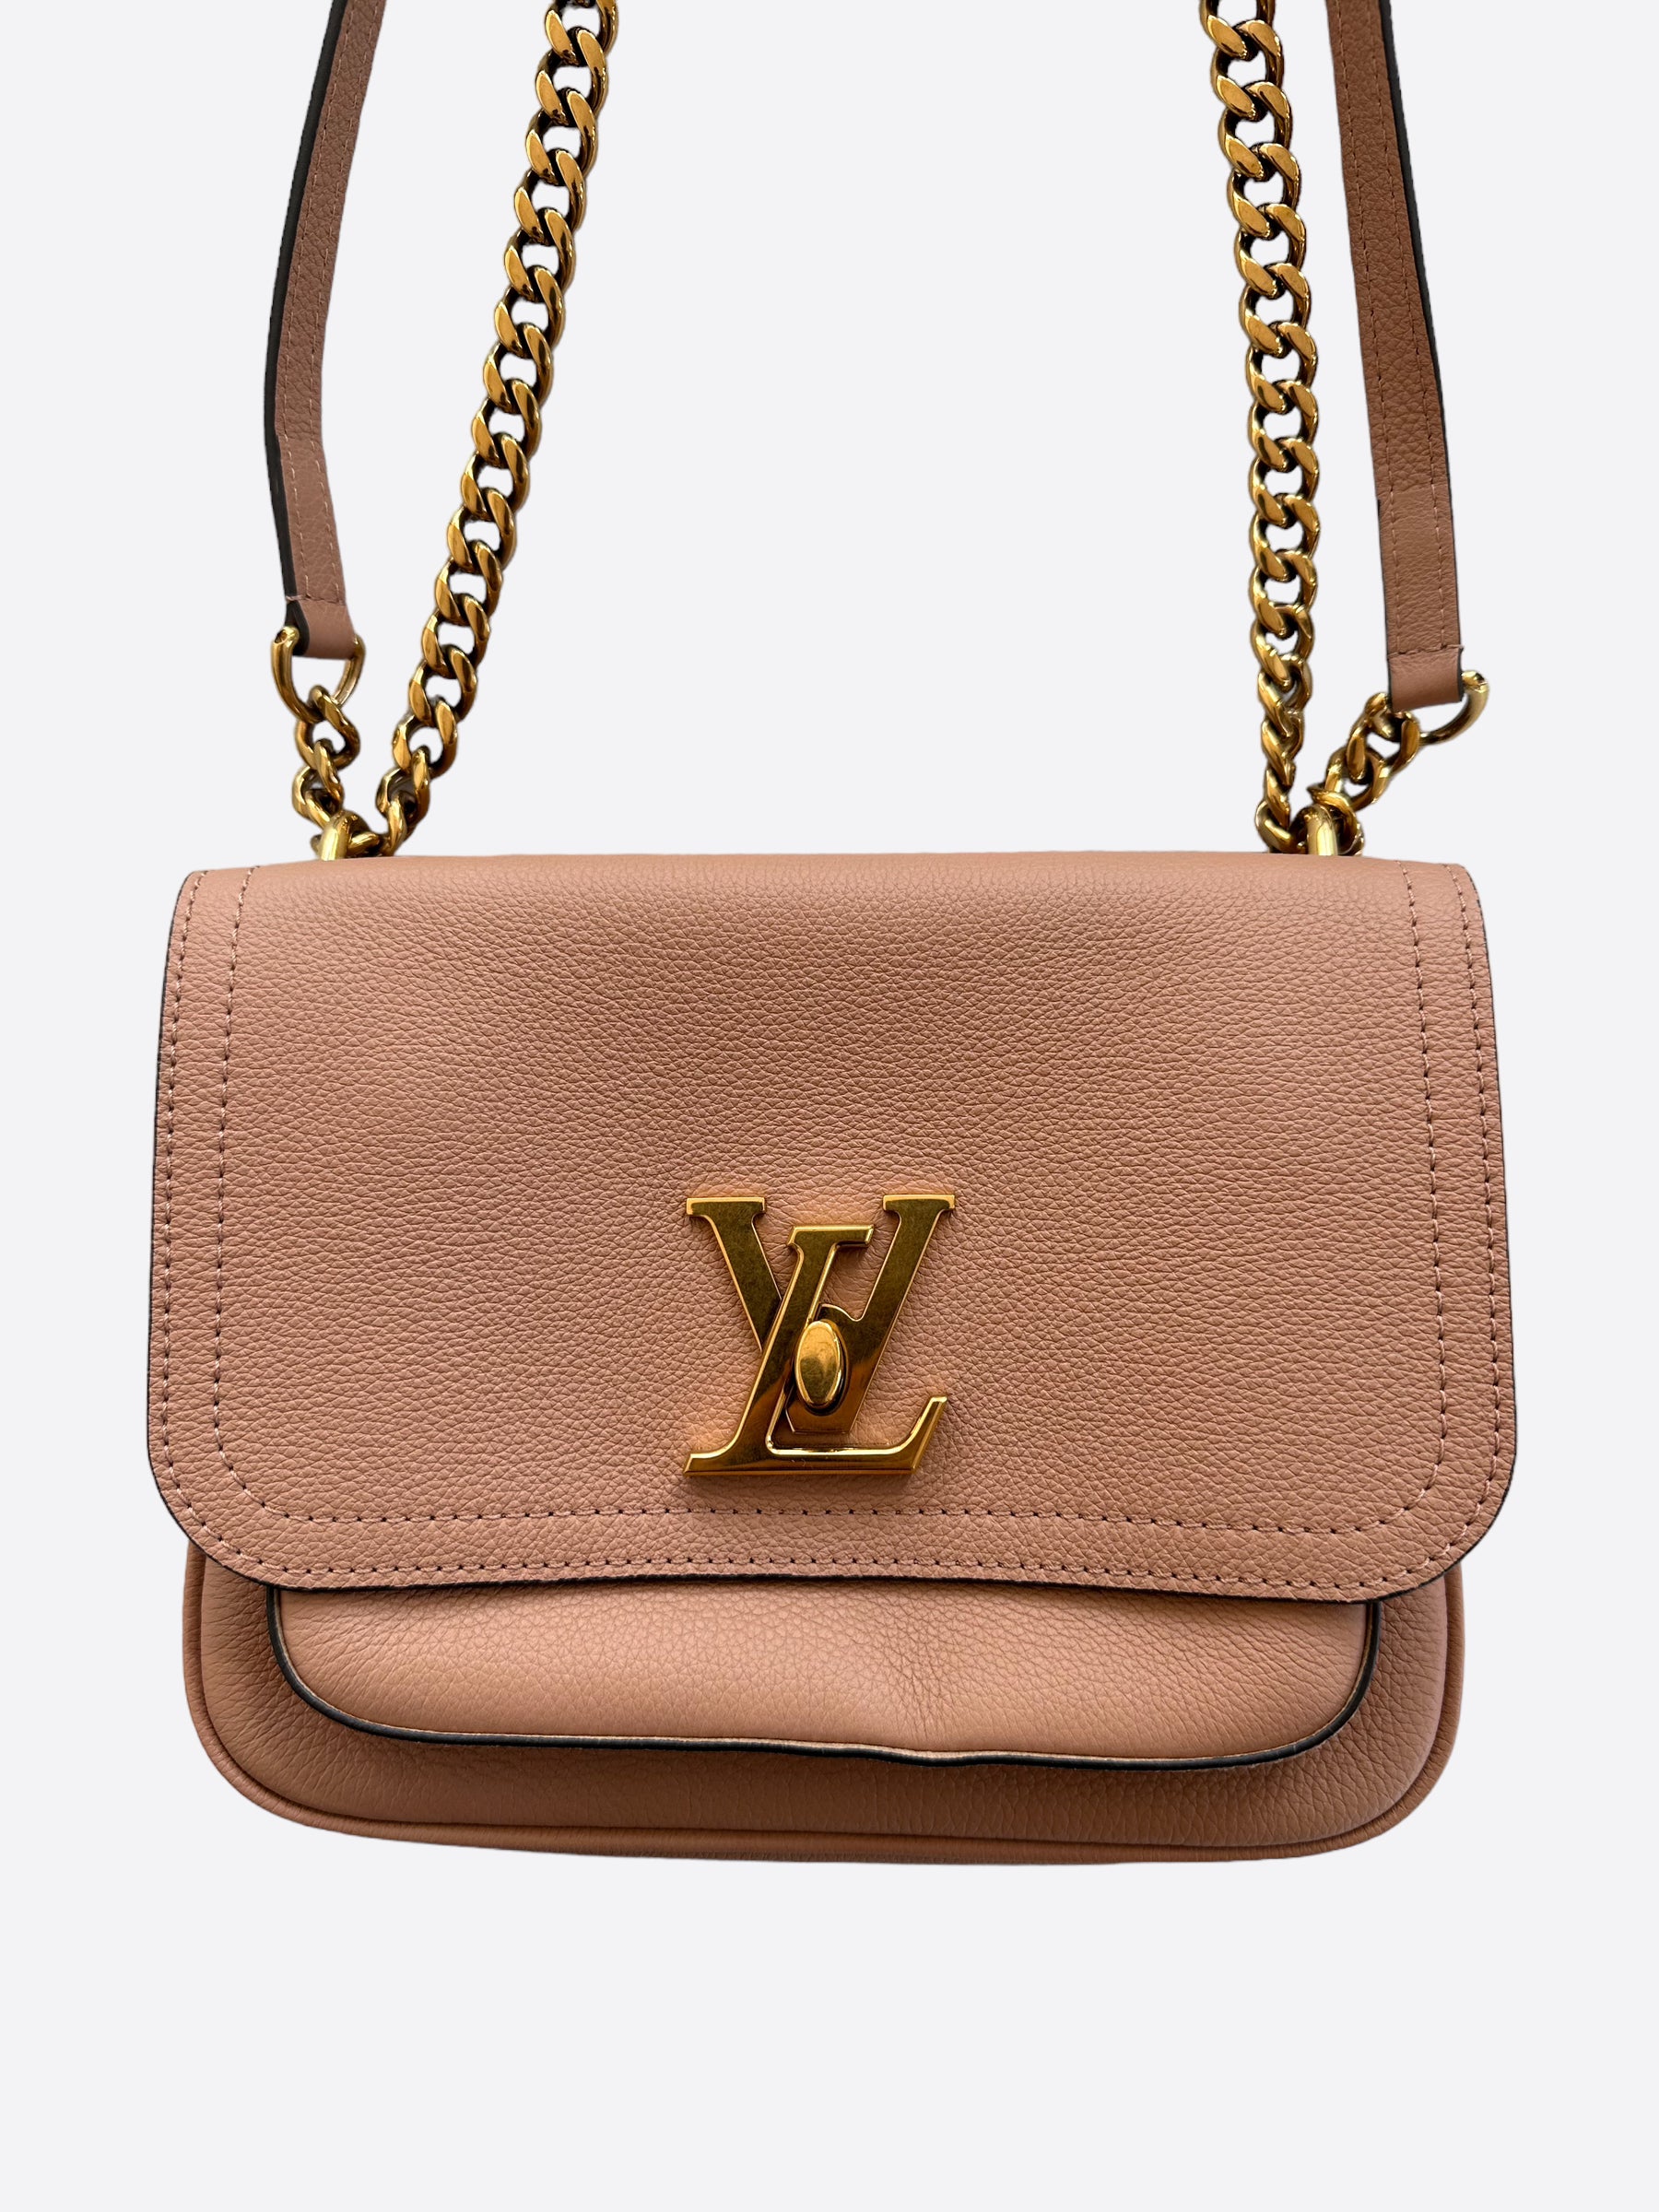 Louis Vuitton Lockme Chain Bag, Black, One Size